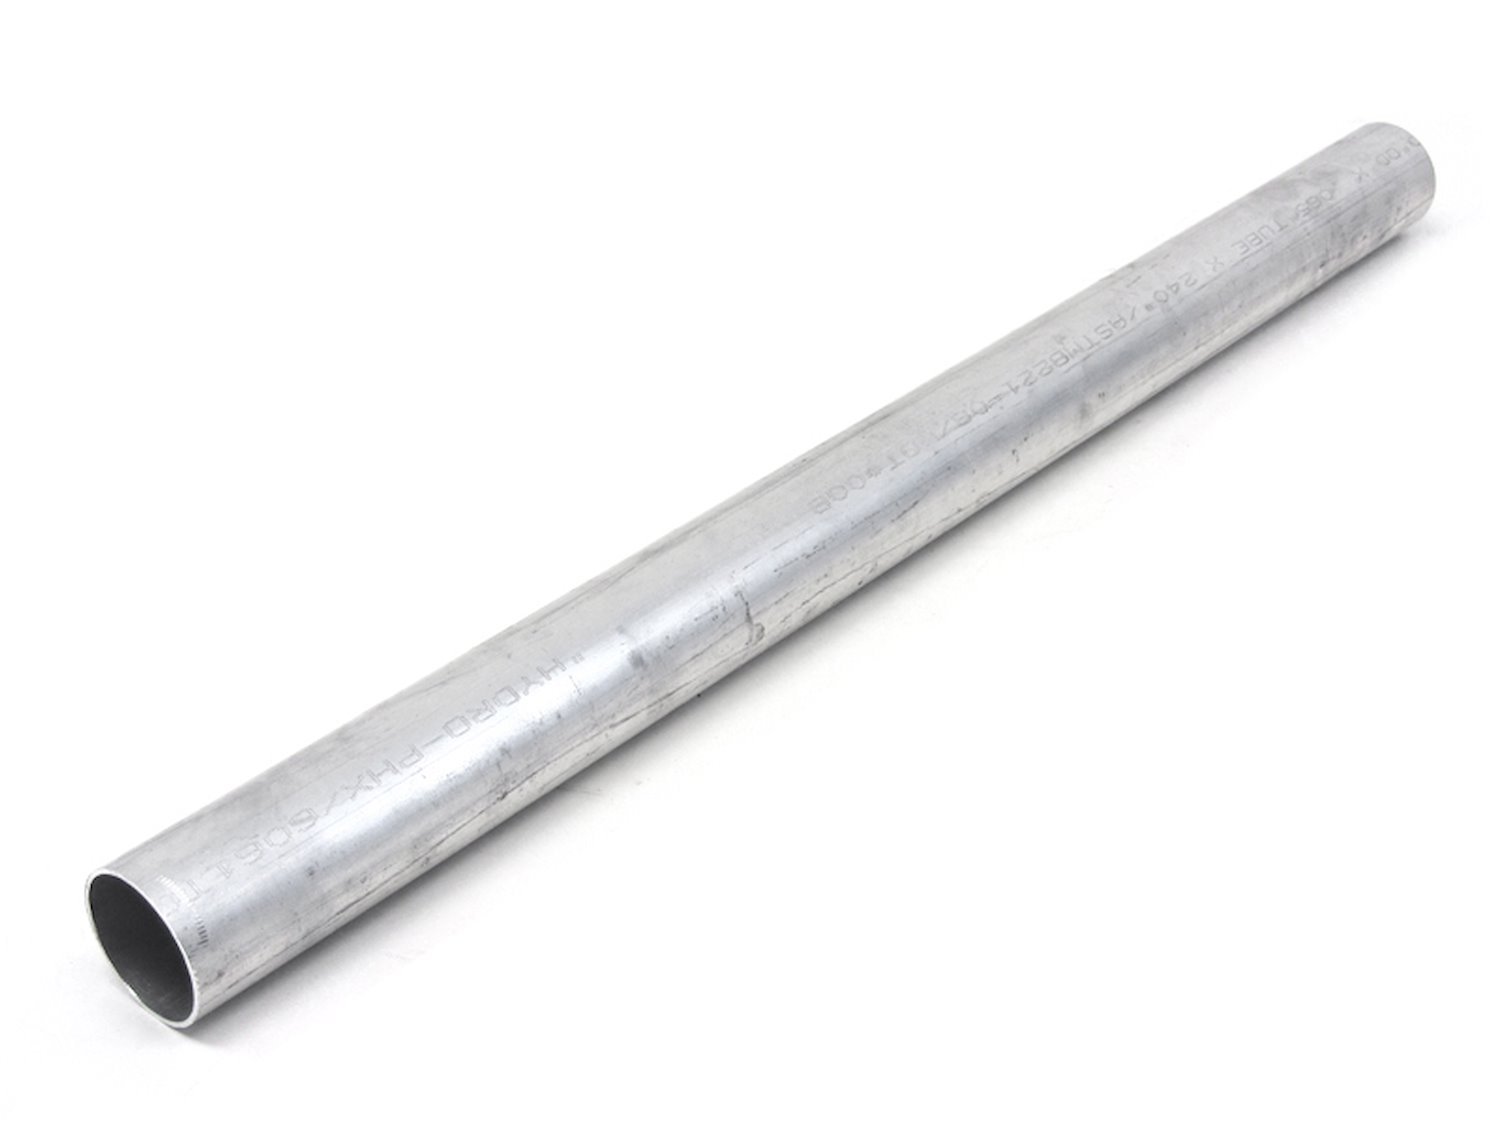 AST-2F-325 Aluminum Tubing, 6061 Aluminum, Straight Tubing, 3-1/4 in. OD, Seamless, Raw Finish, 2 ft. Long